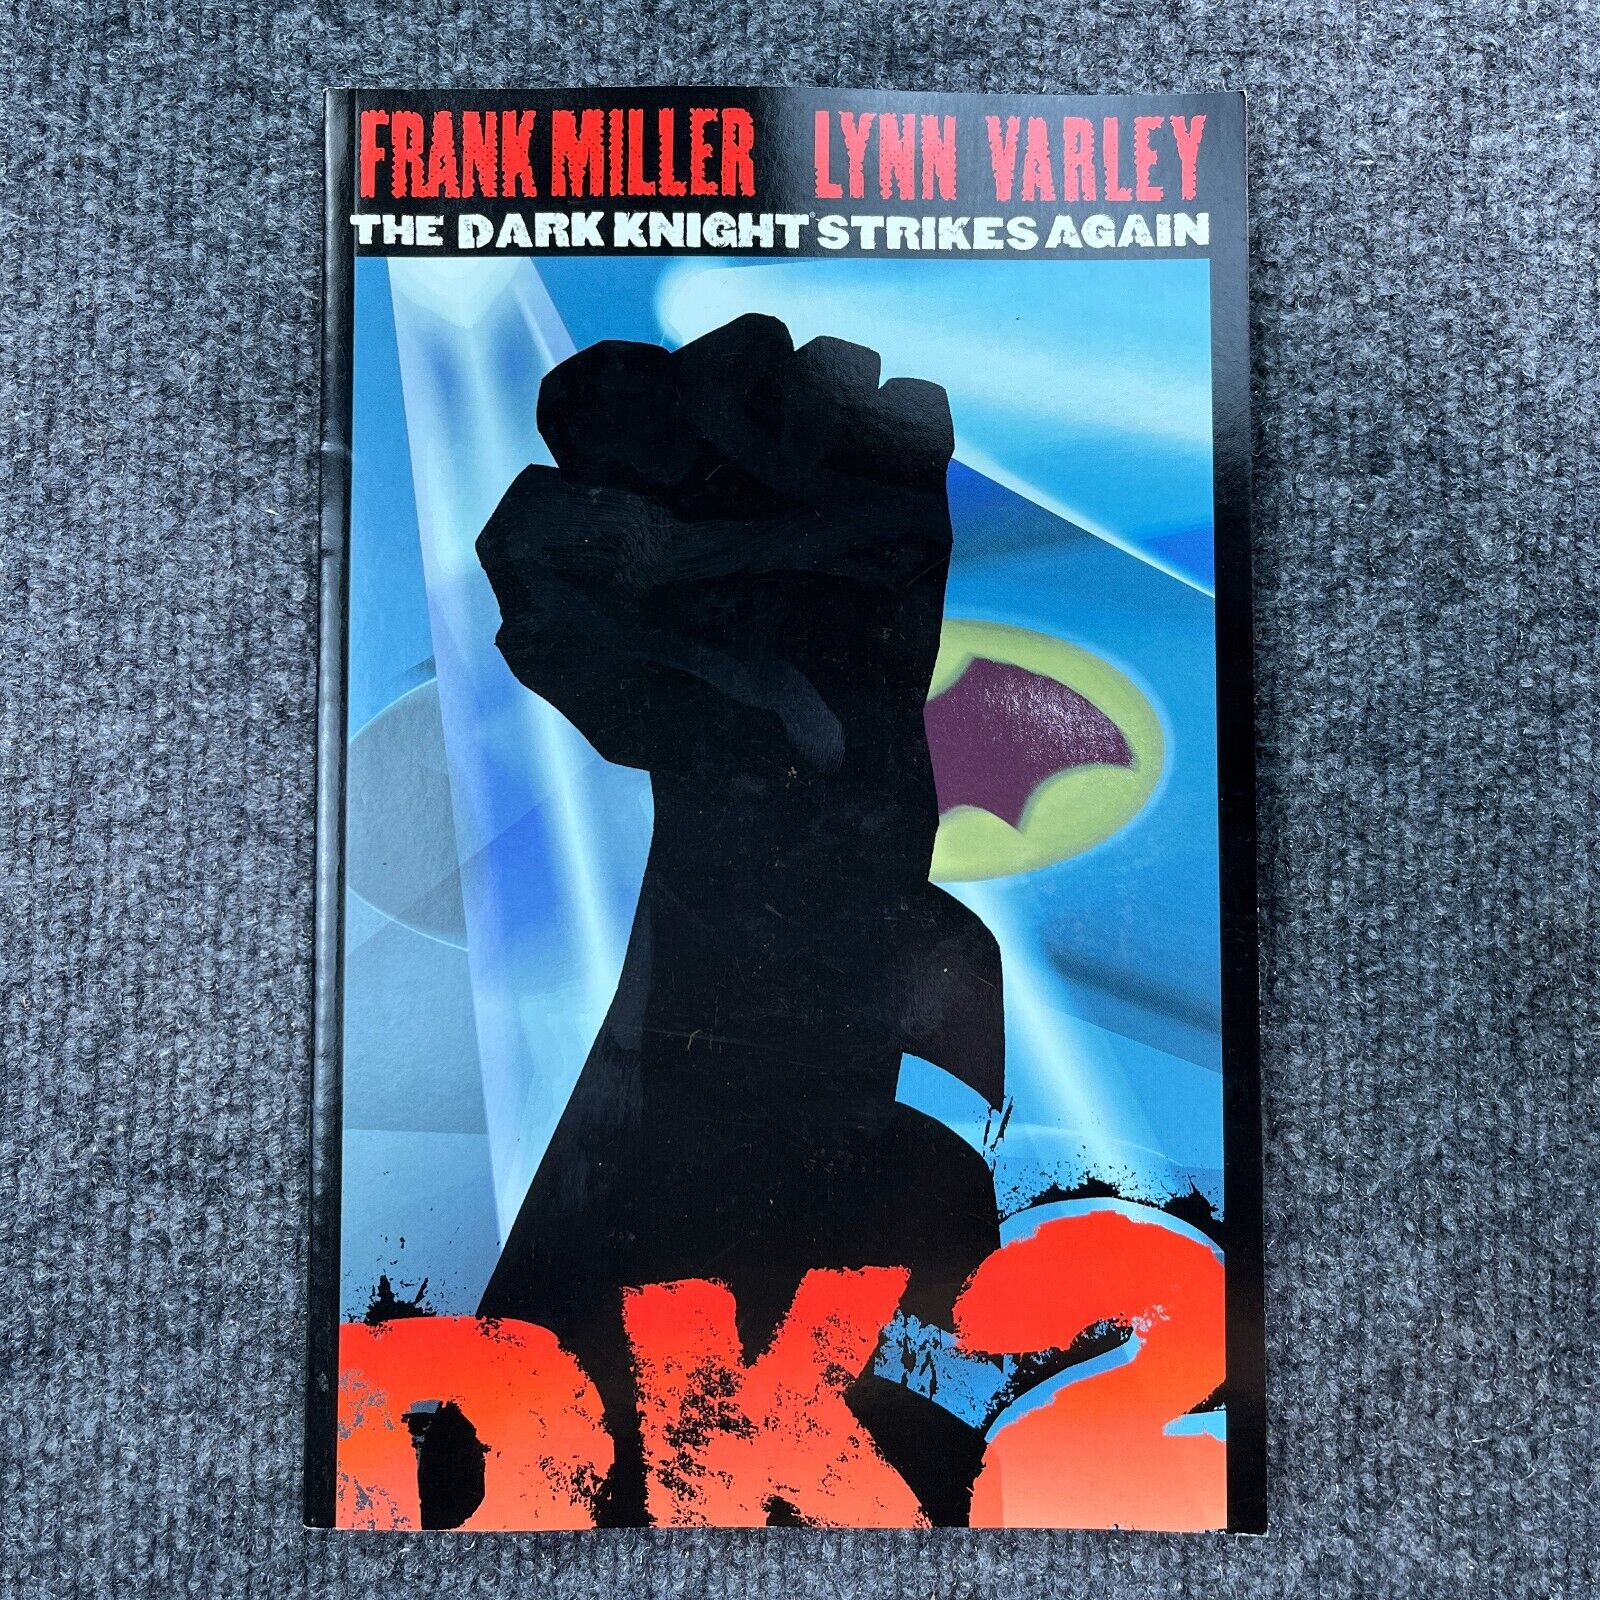 Batman DK2 The Dark Knight Strikes Again # 1 - Frank Miller Paperback